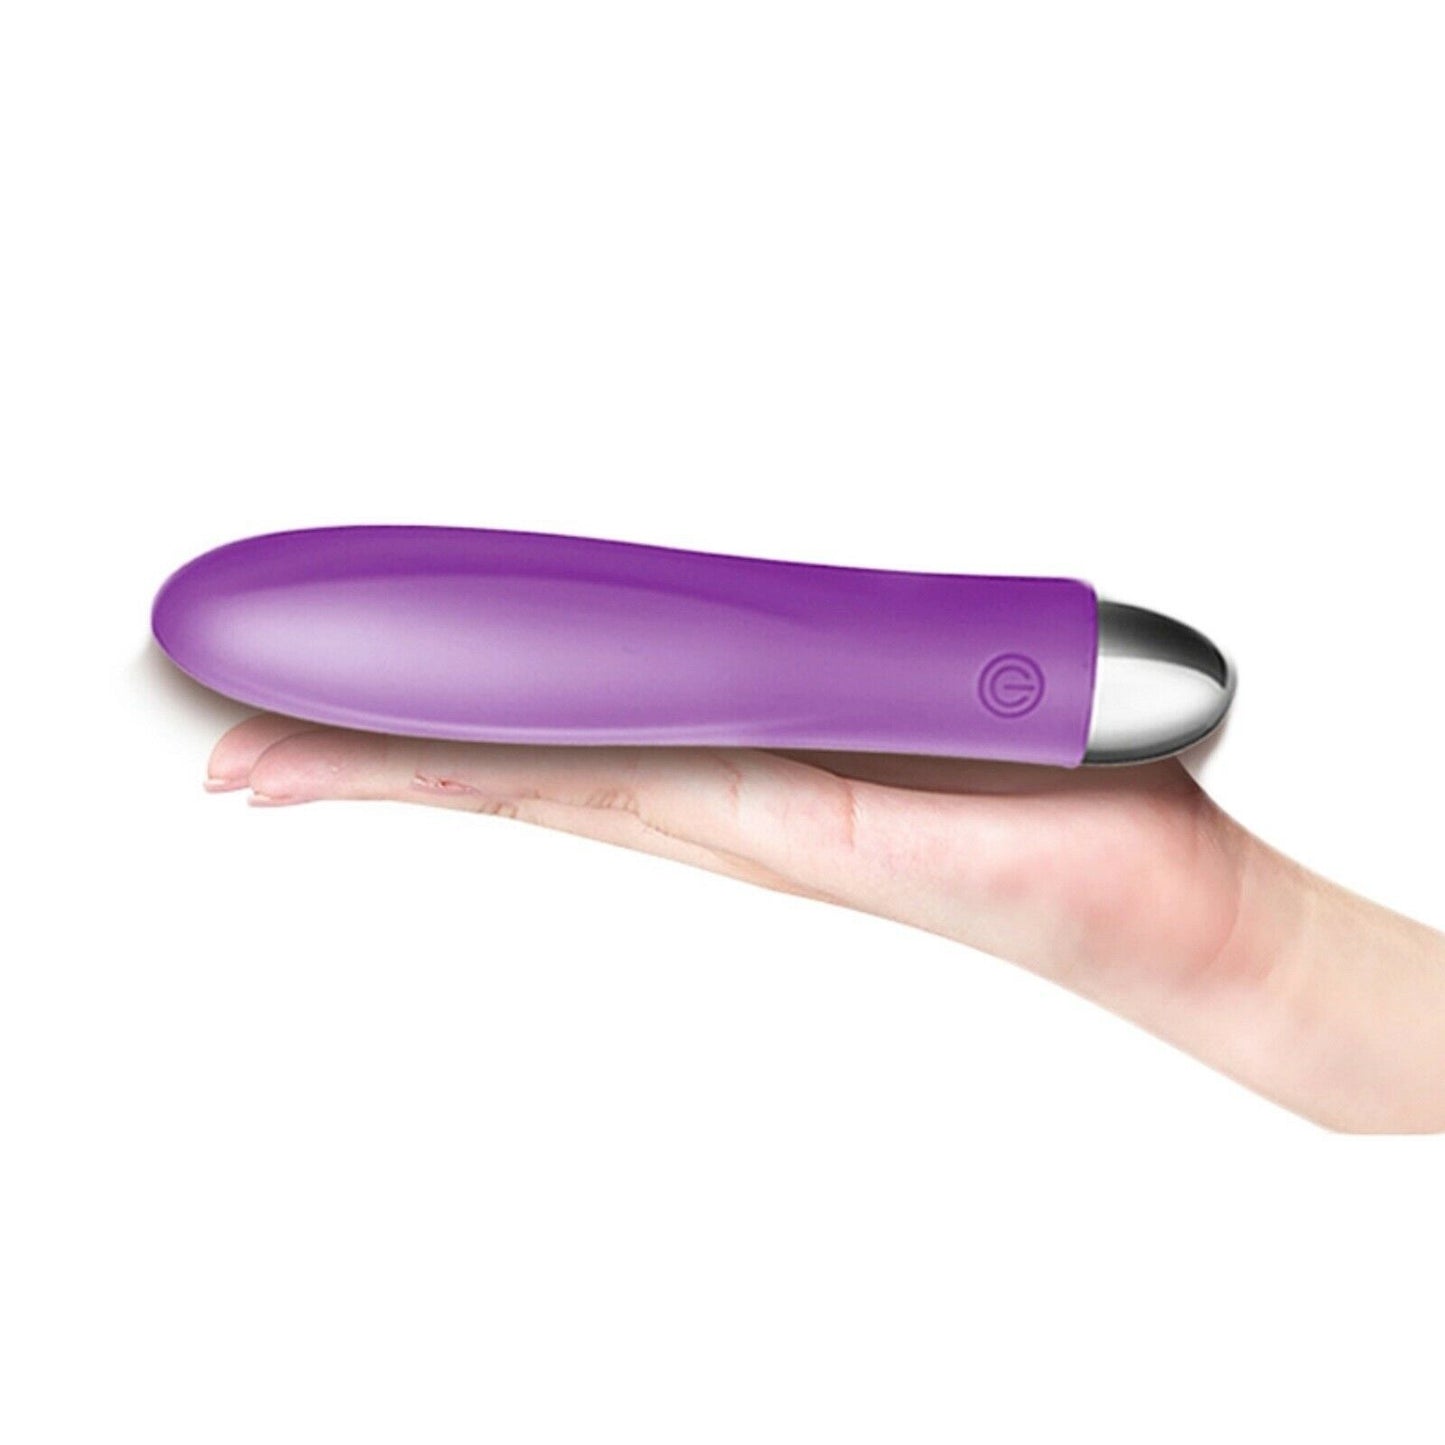 Vibrator Dildo Wand Female Vaginal Clit Anal Bullet G Spot Massager Adult Sex Toy